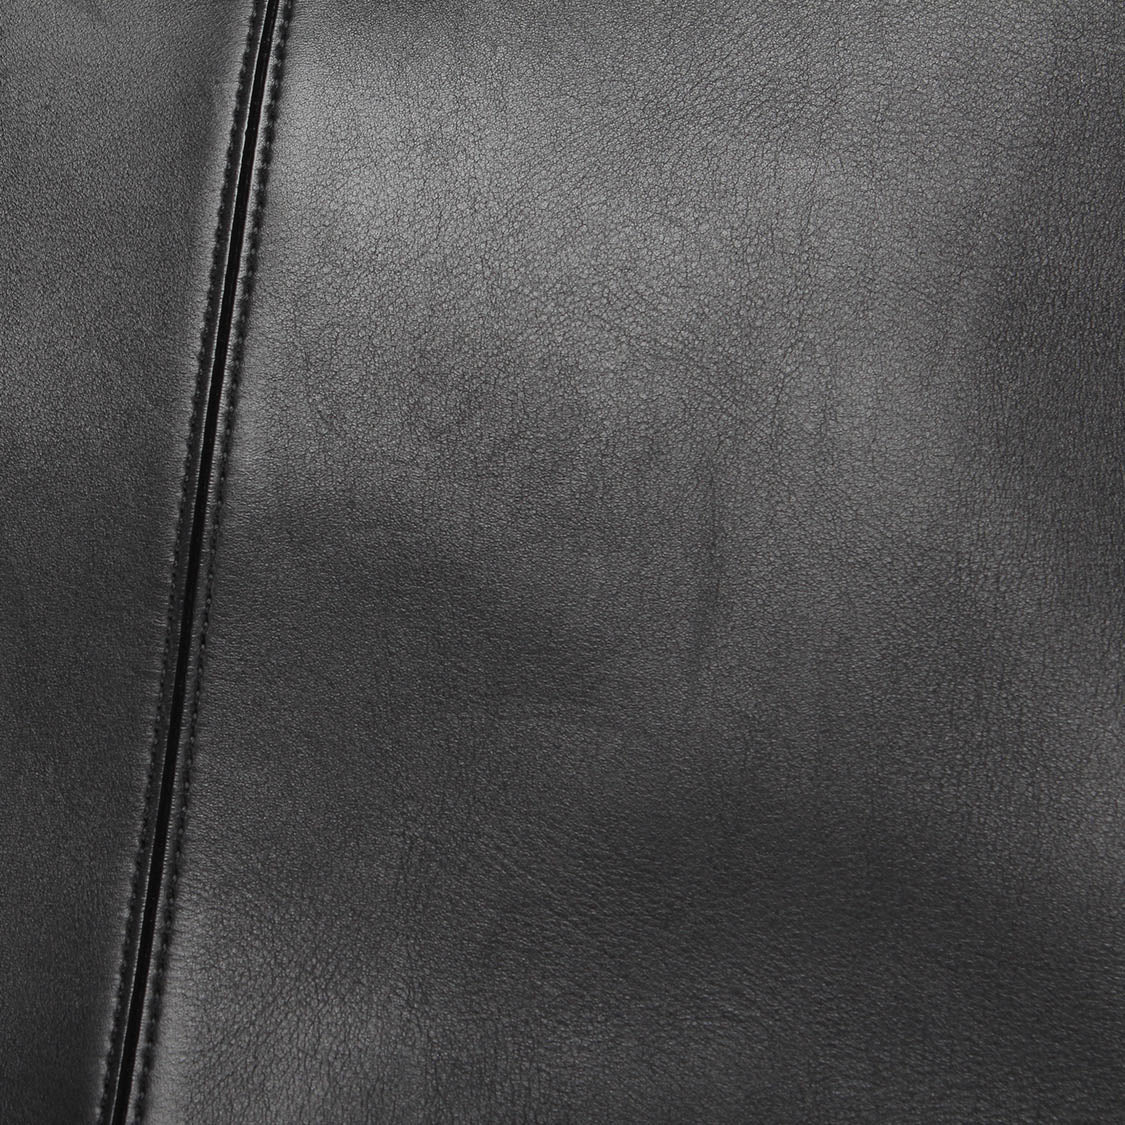 Small Tri-Fold Leather Tote Bag